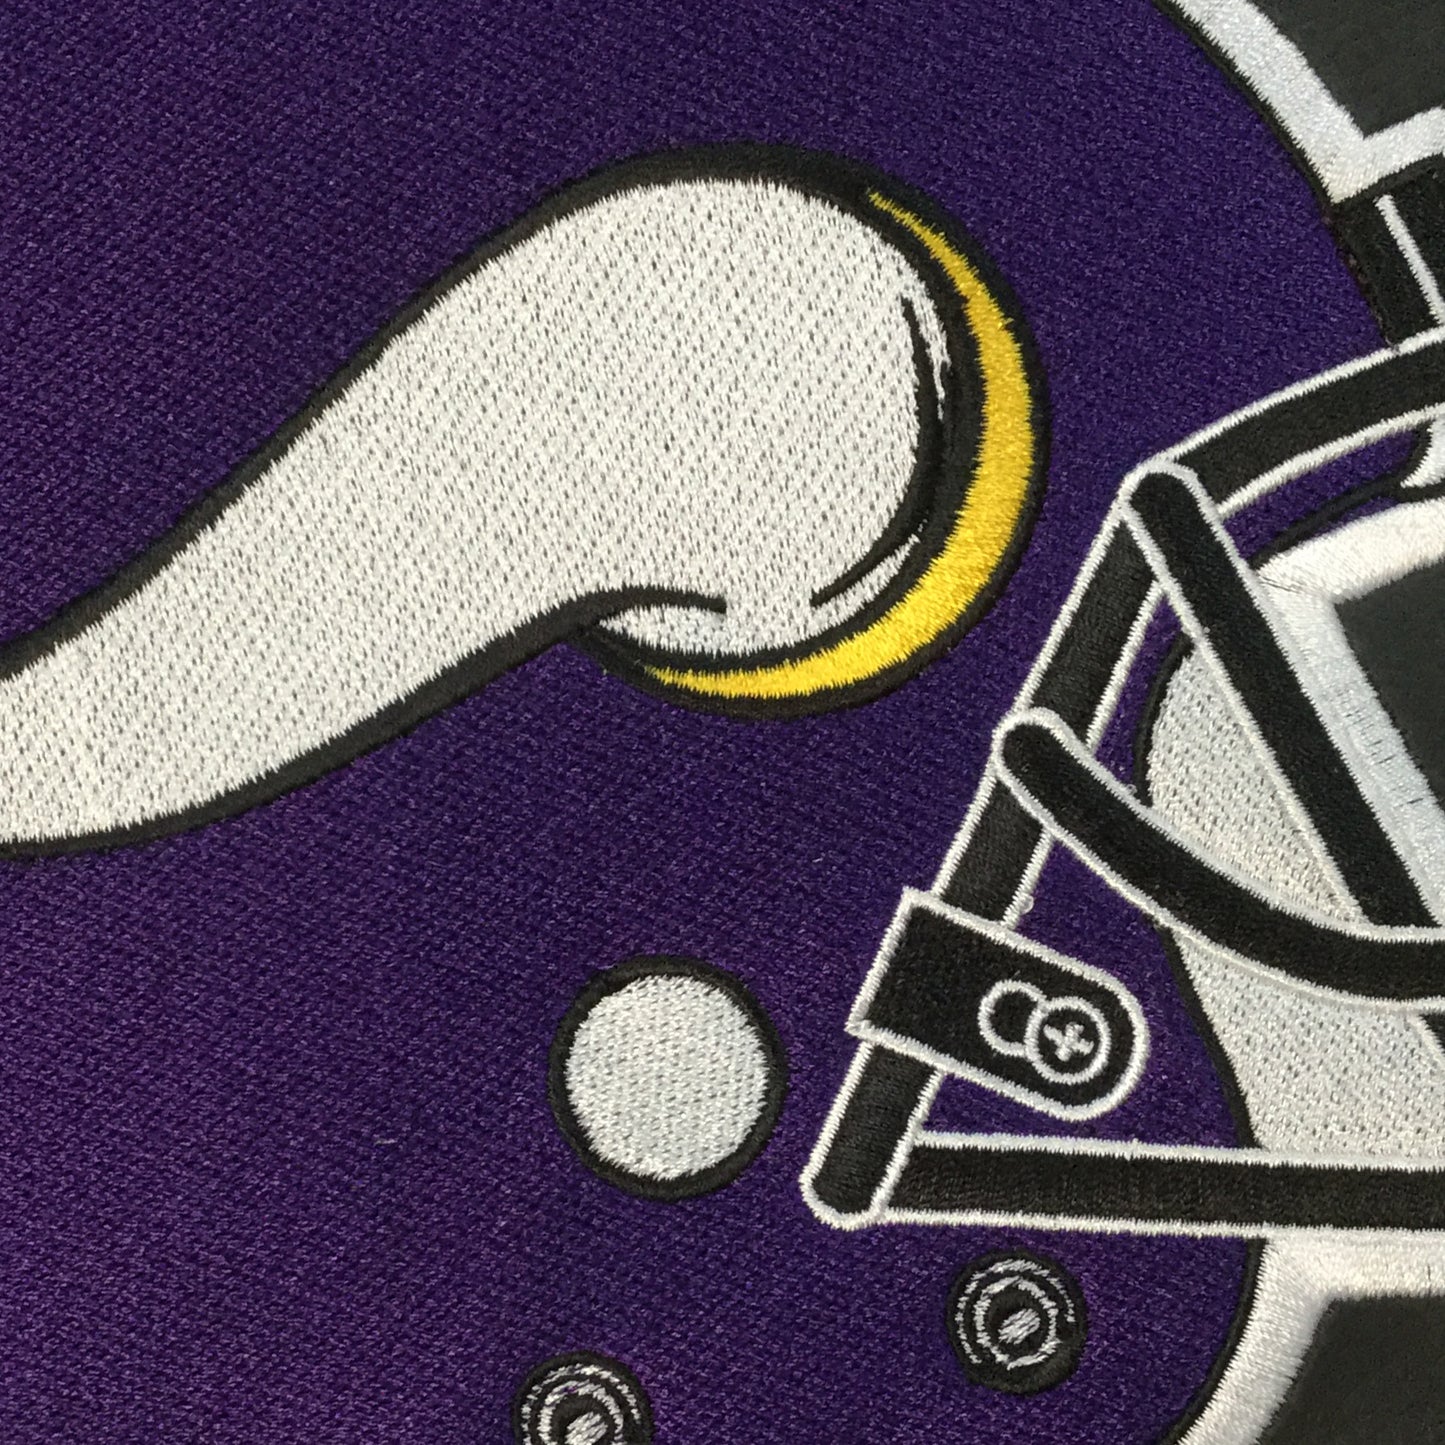 Xpression Pro Gaming Chair with  Minnesota Vikings Helmet Logo